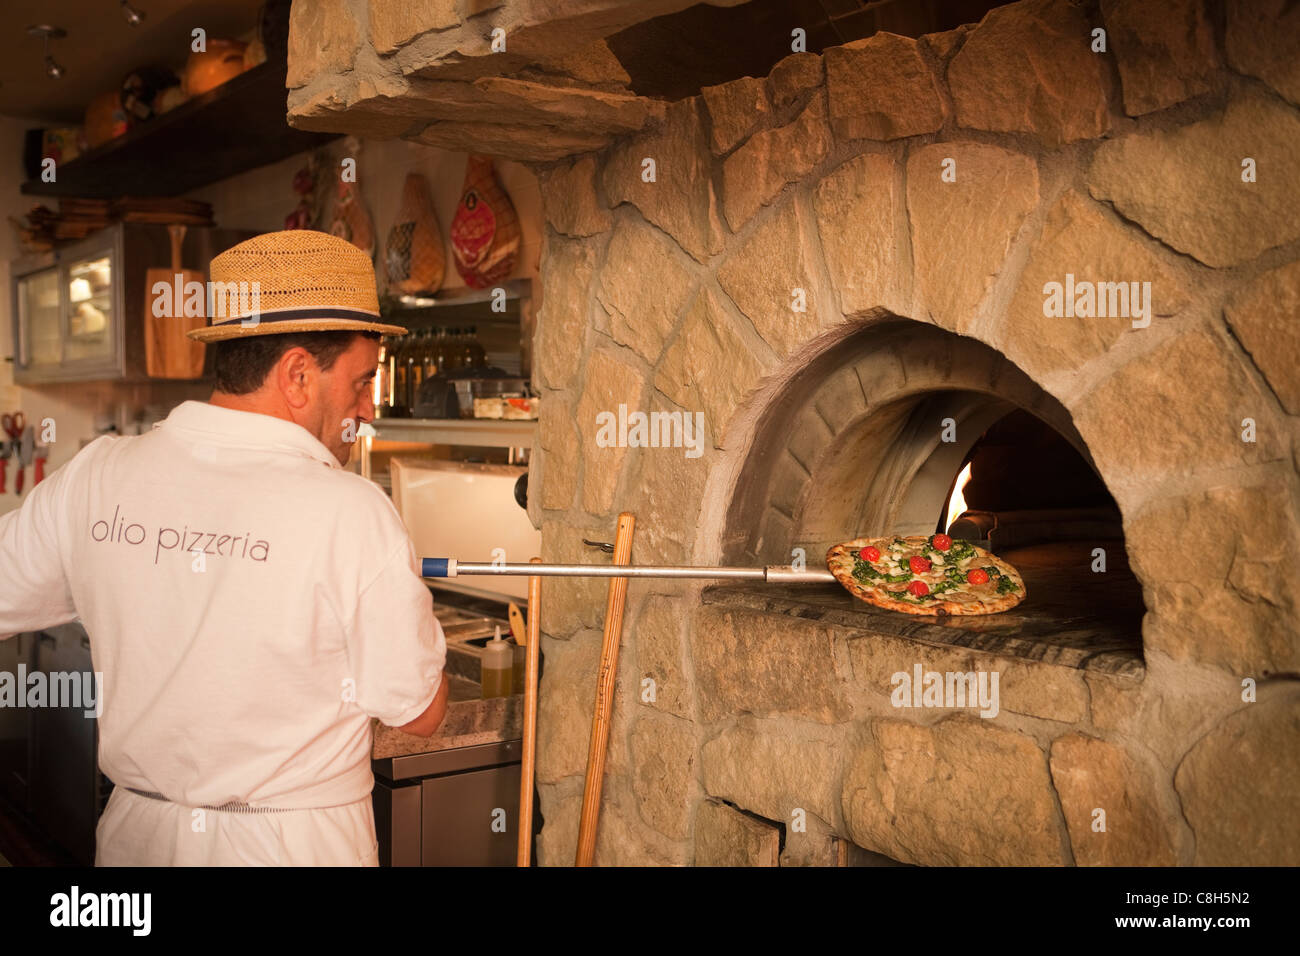 Hombre insertar paesana pizza en un horno de piedra para hornear, Olio  pizzería, Santa Bárbara, California, Estados Unidos de América Fotografía  de stock - Alamy